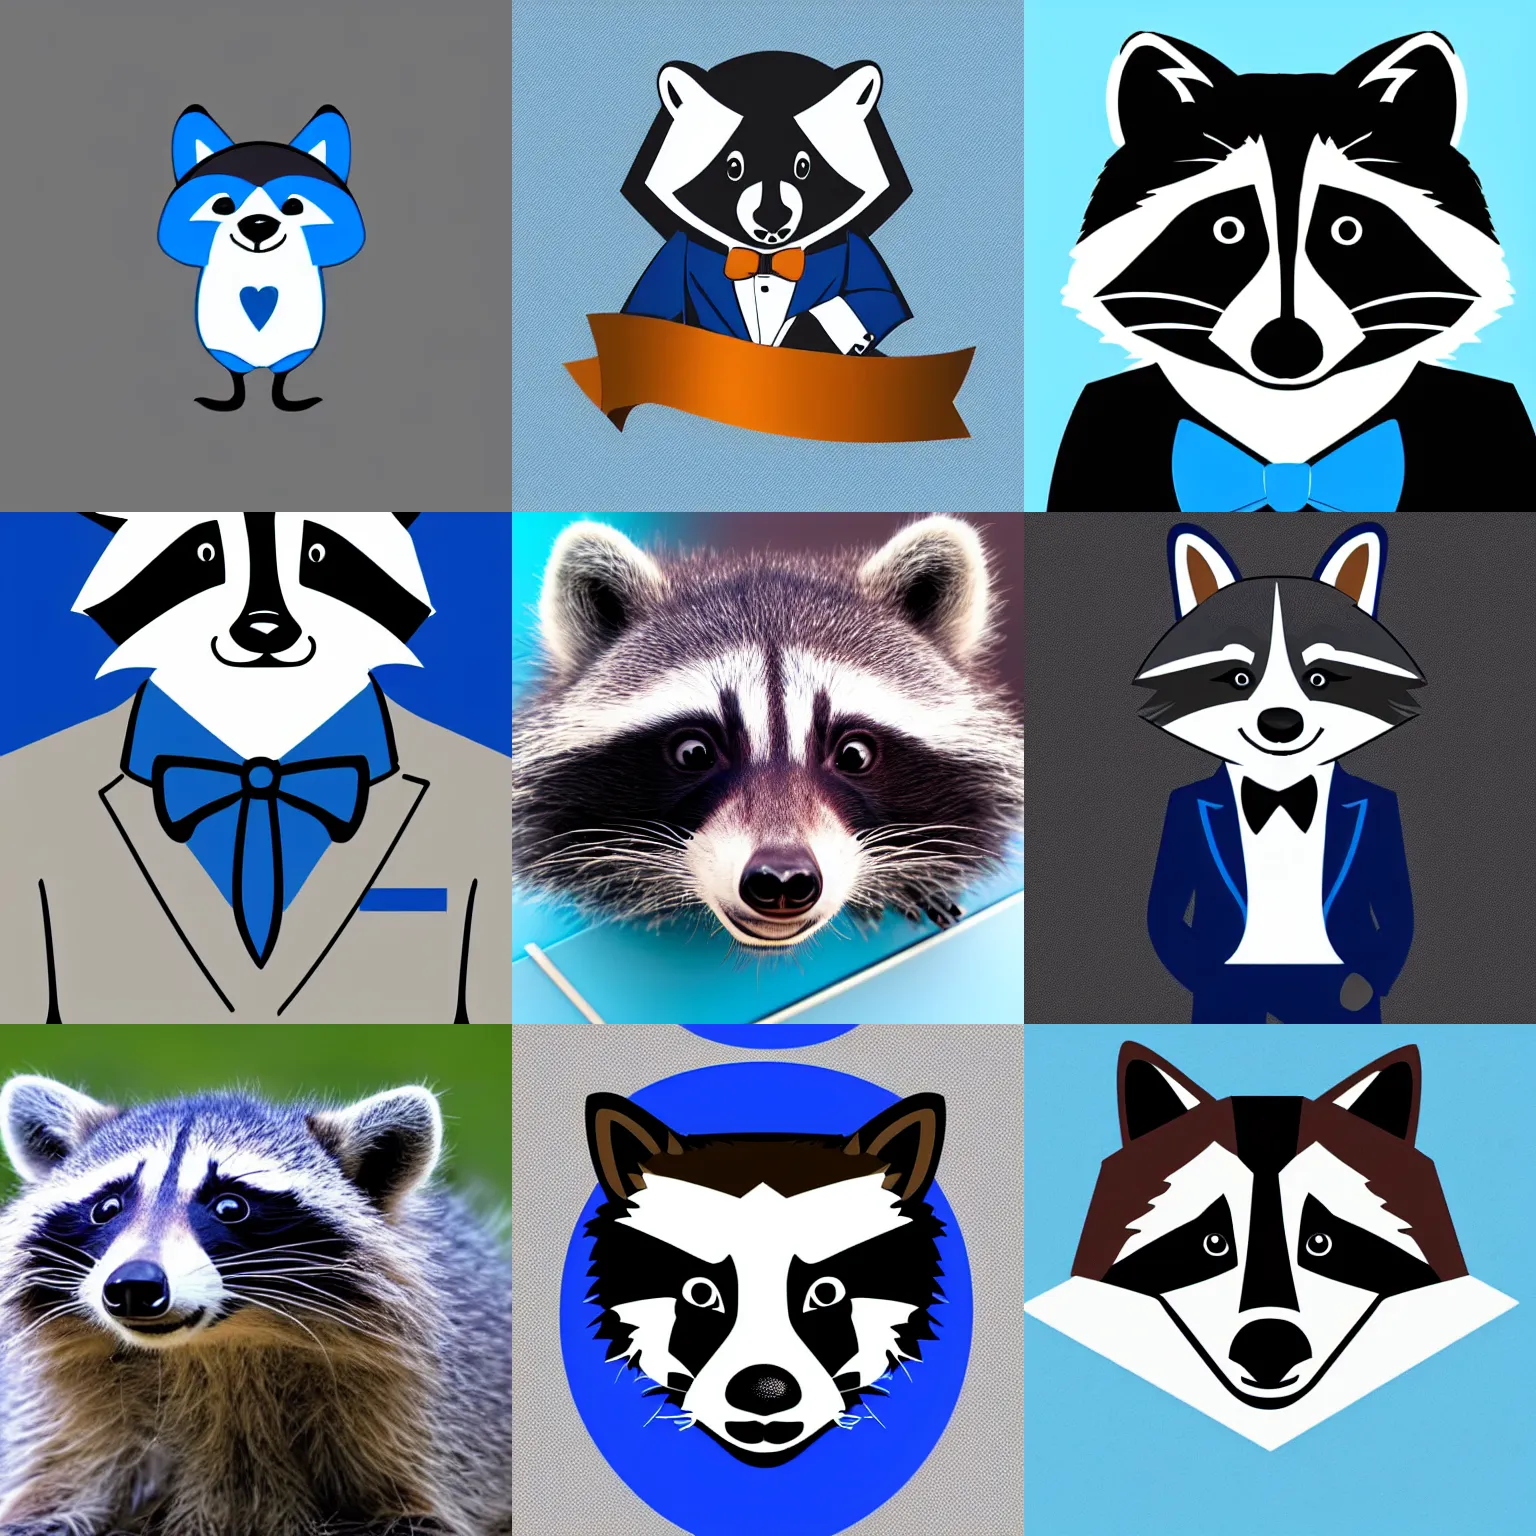 Prompt: simplistic logo raccoon wearing a blue tuxedo, hd, white background